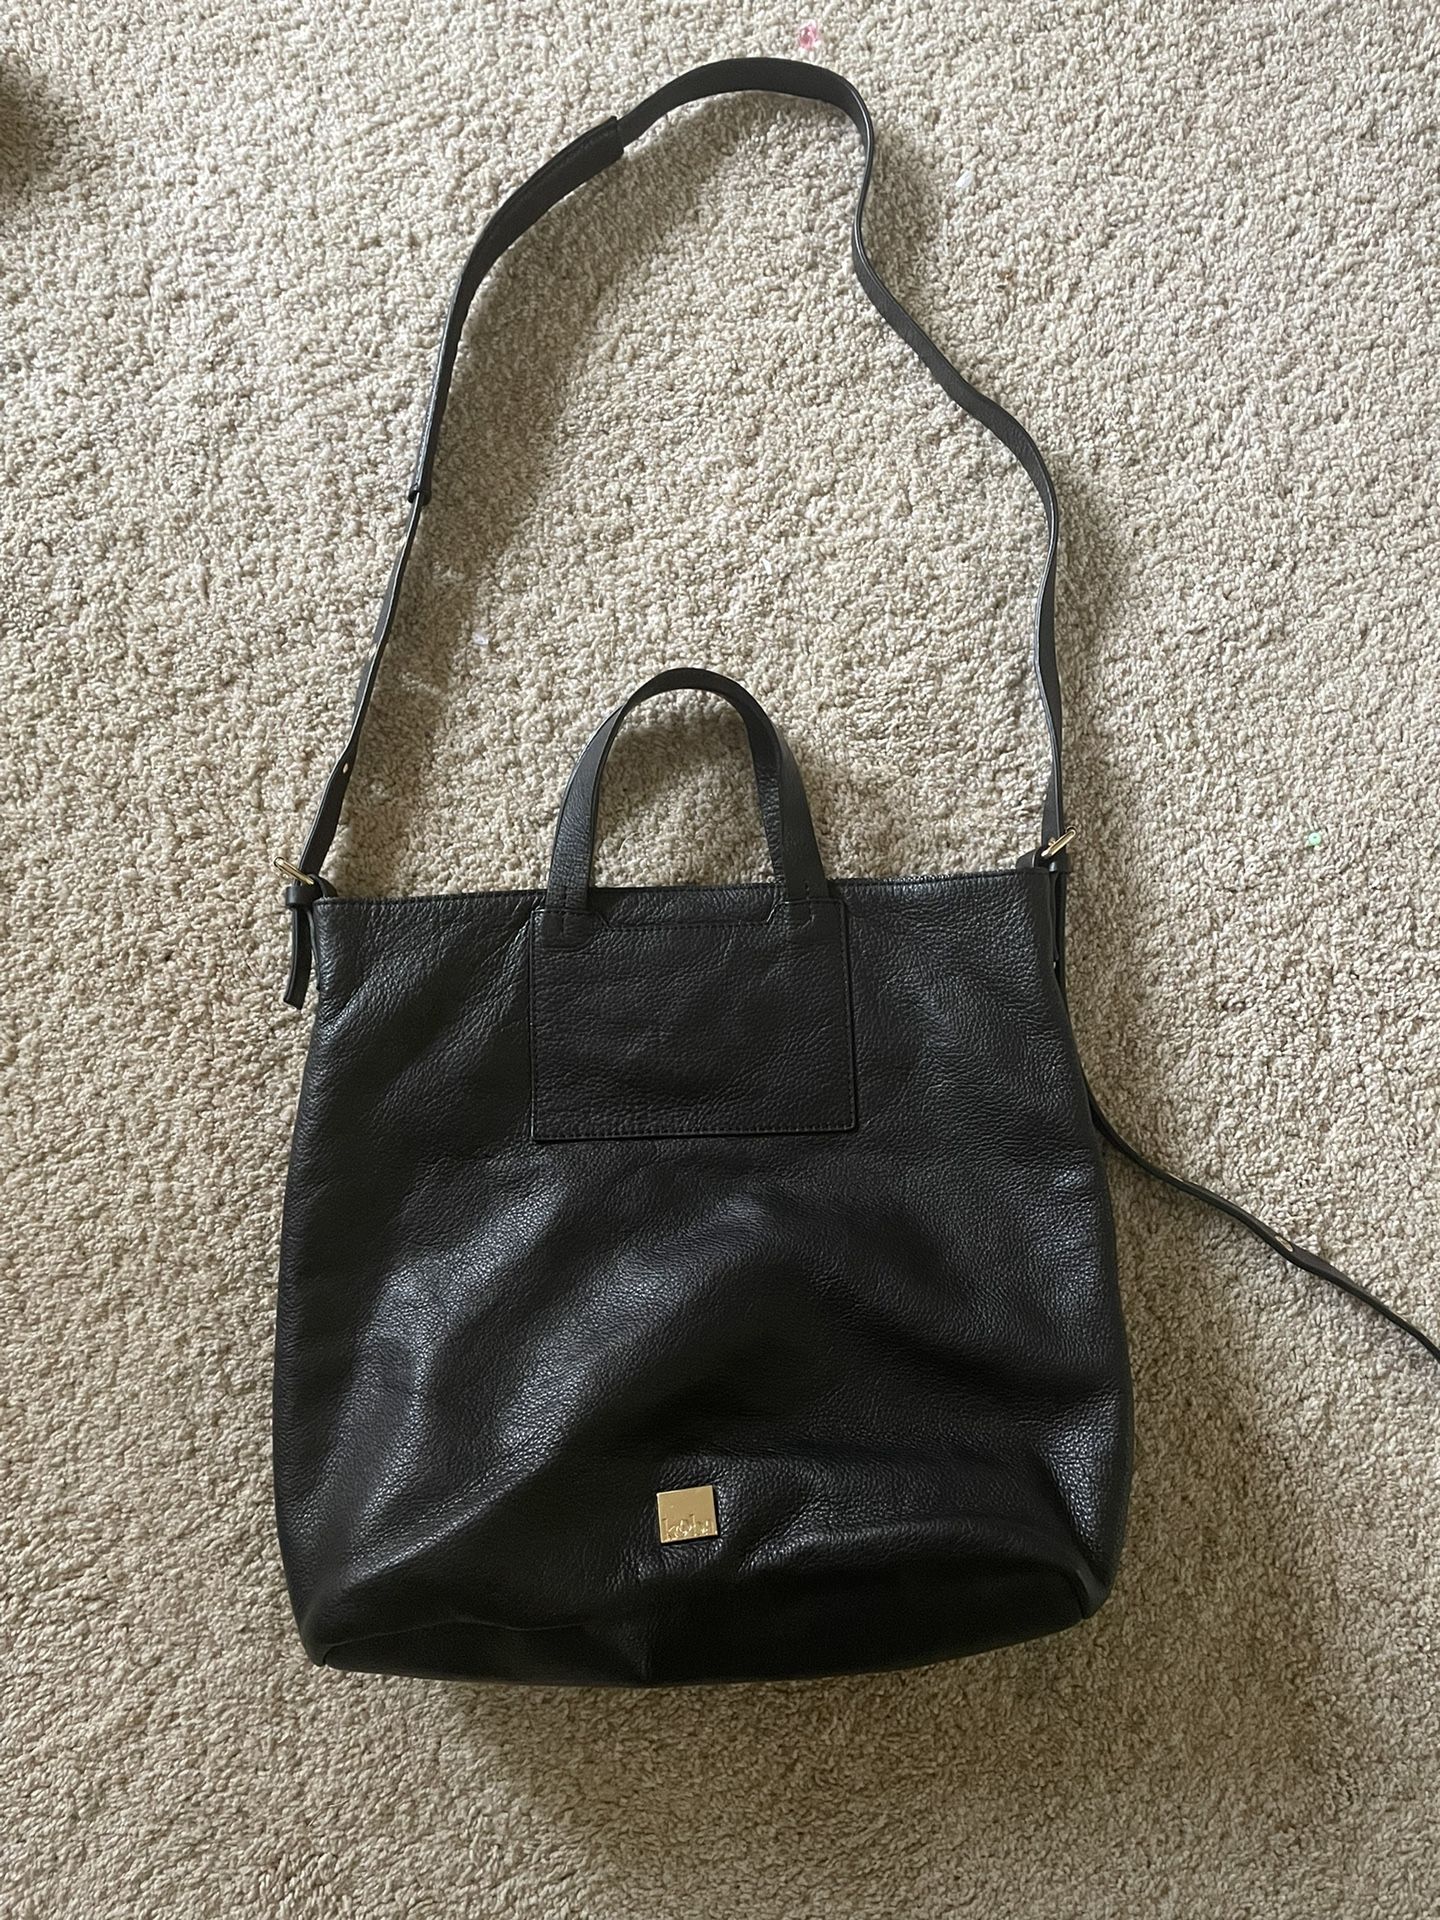 Kooba Black Leather Tote Bag